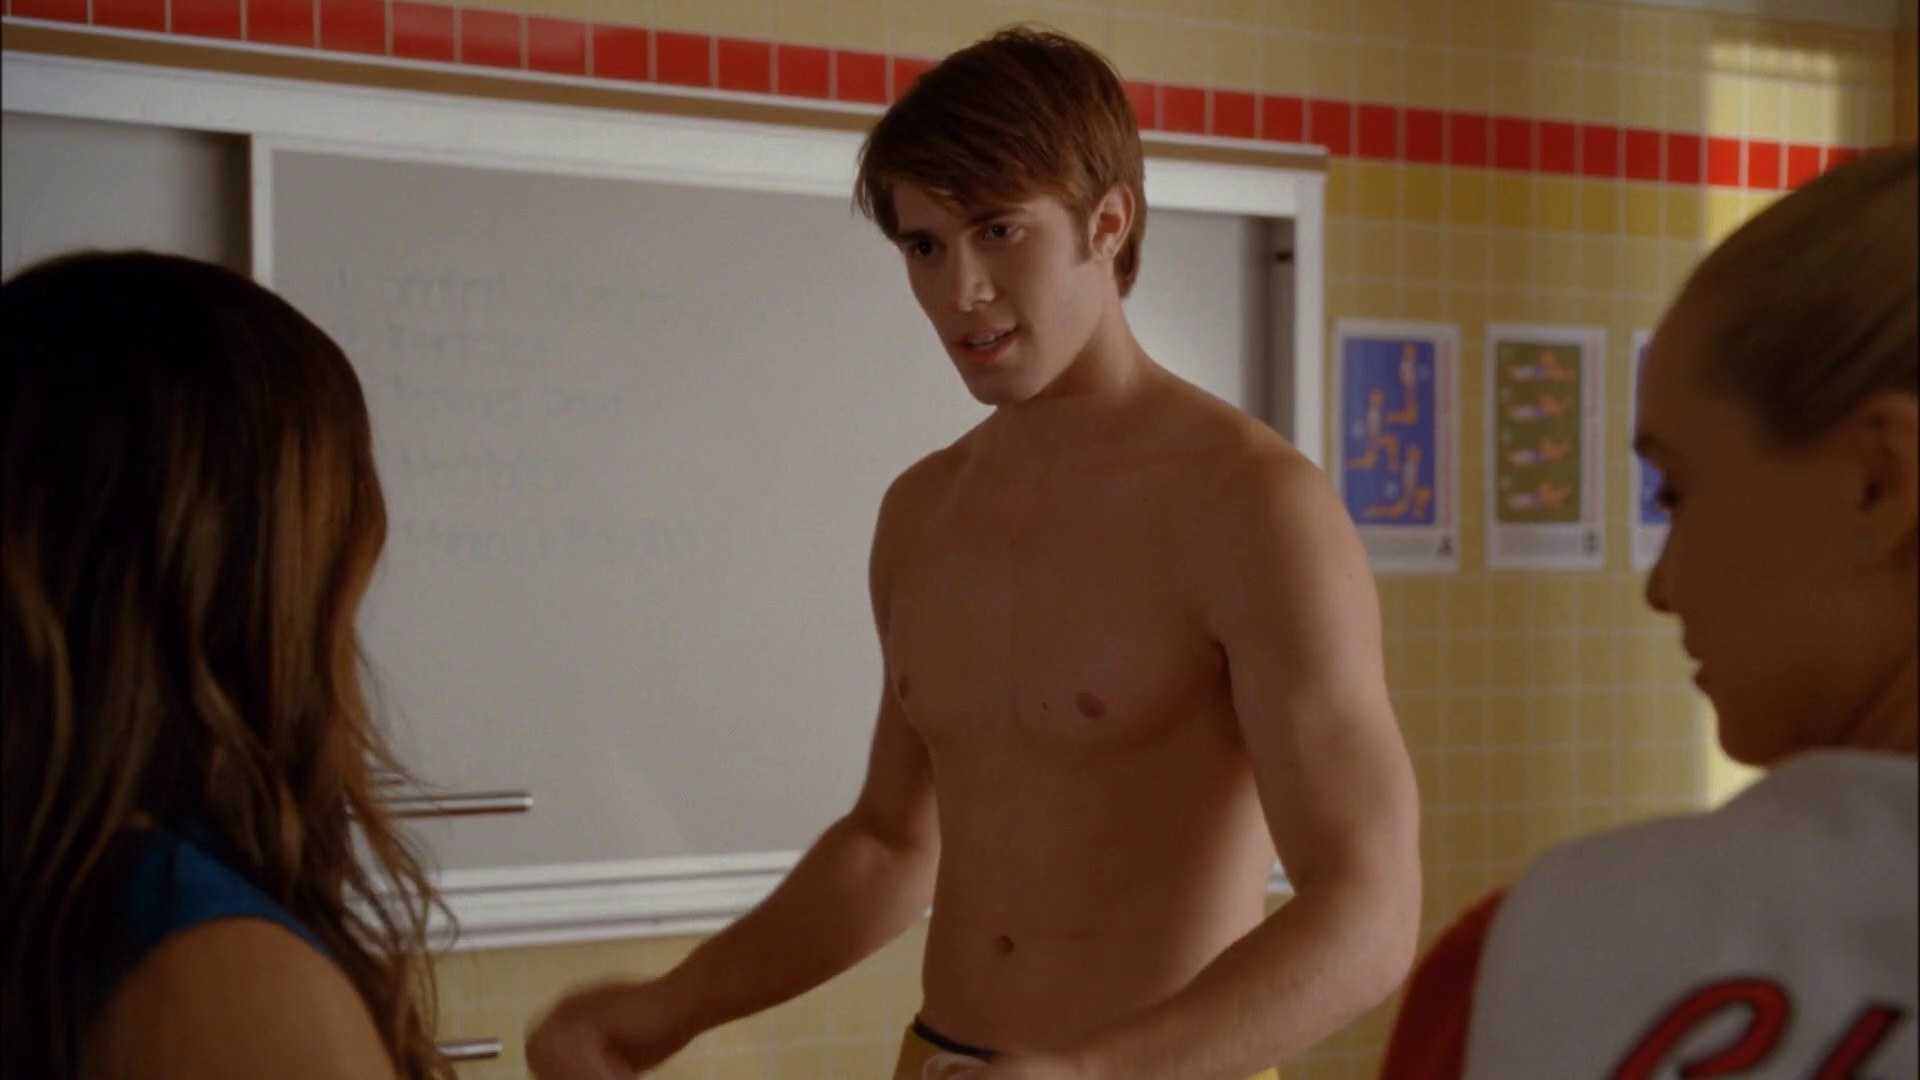 Jacob Artist and Blake Jenner shirtless in Glee 4-12 "Naked" .